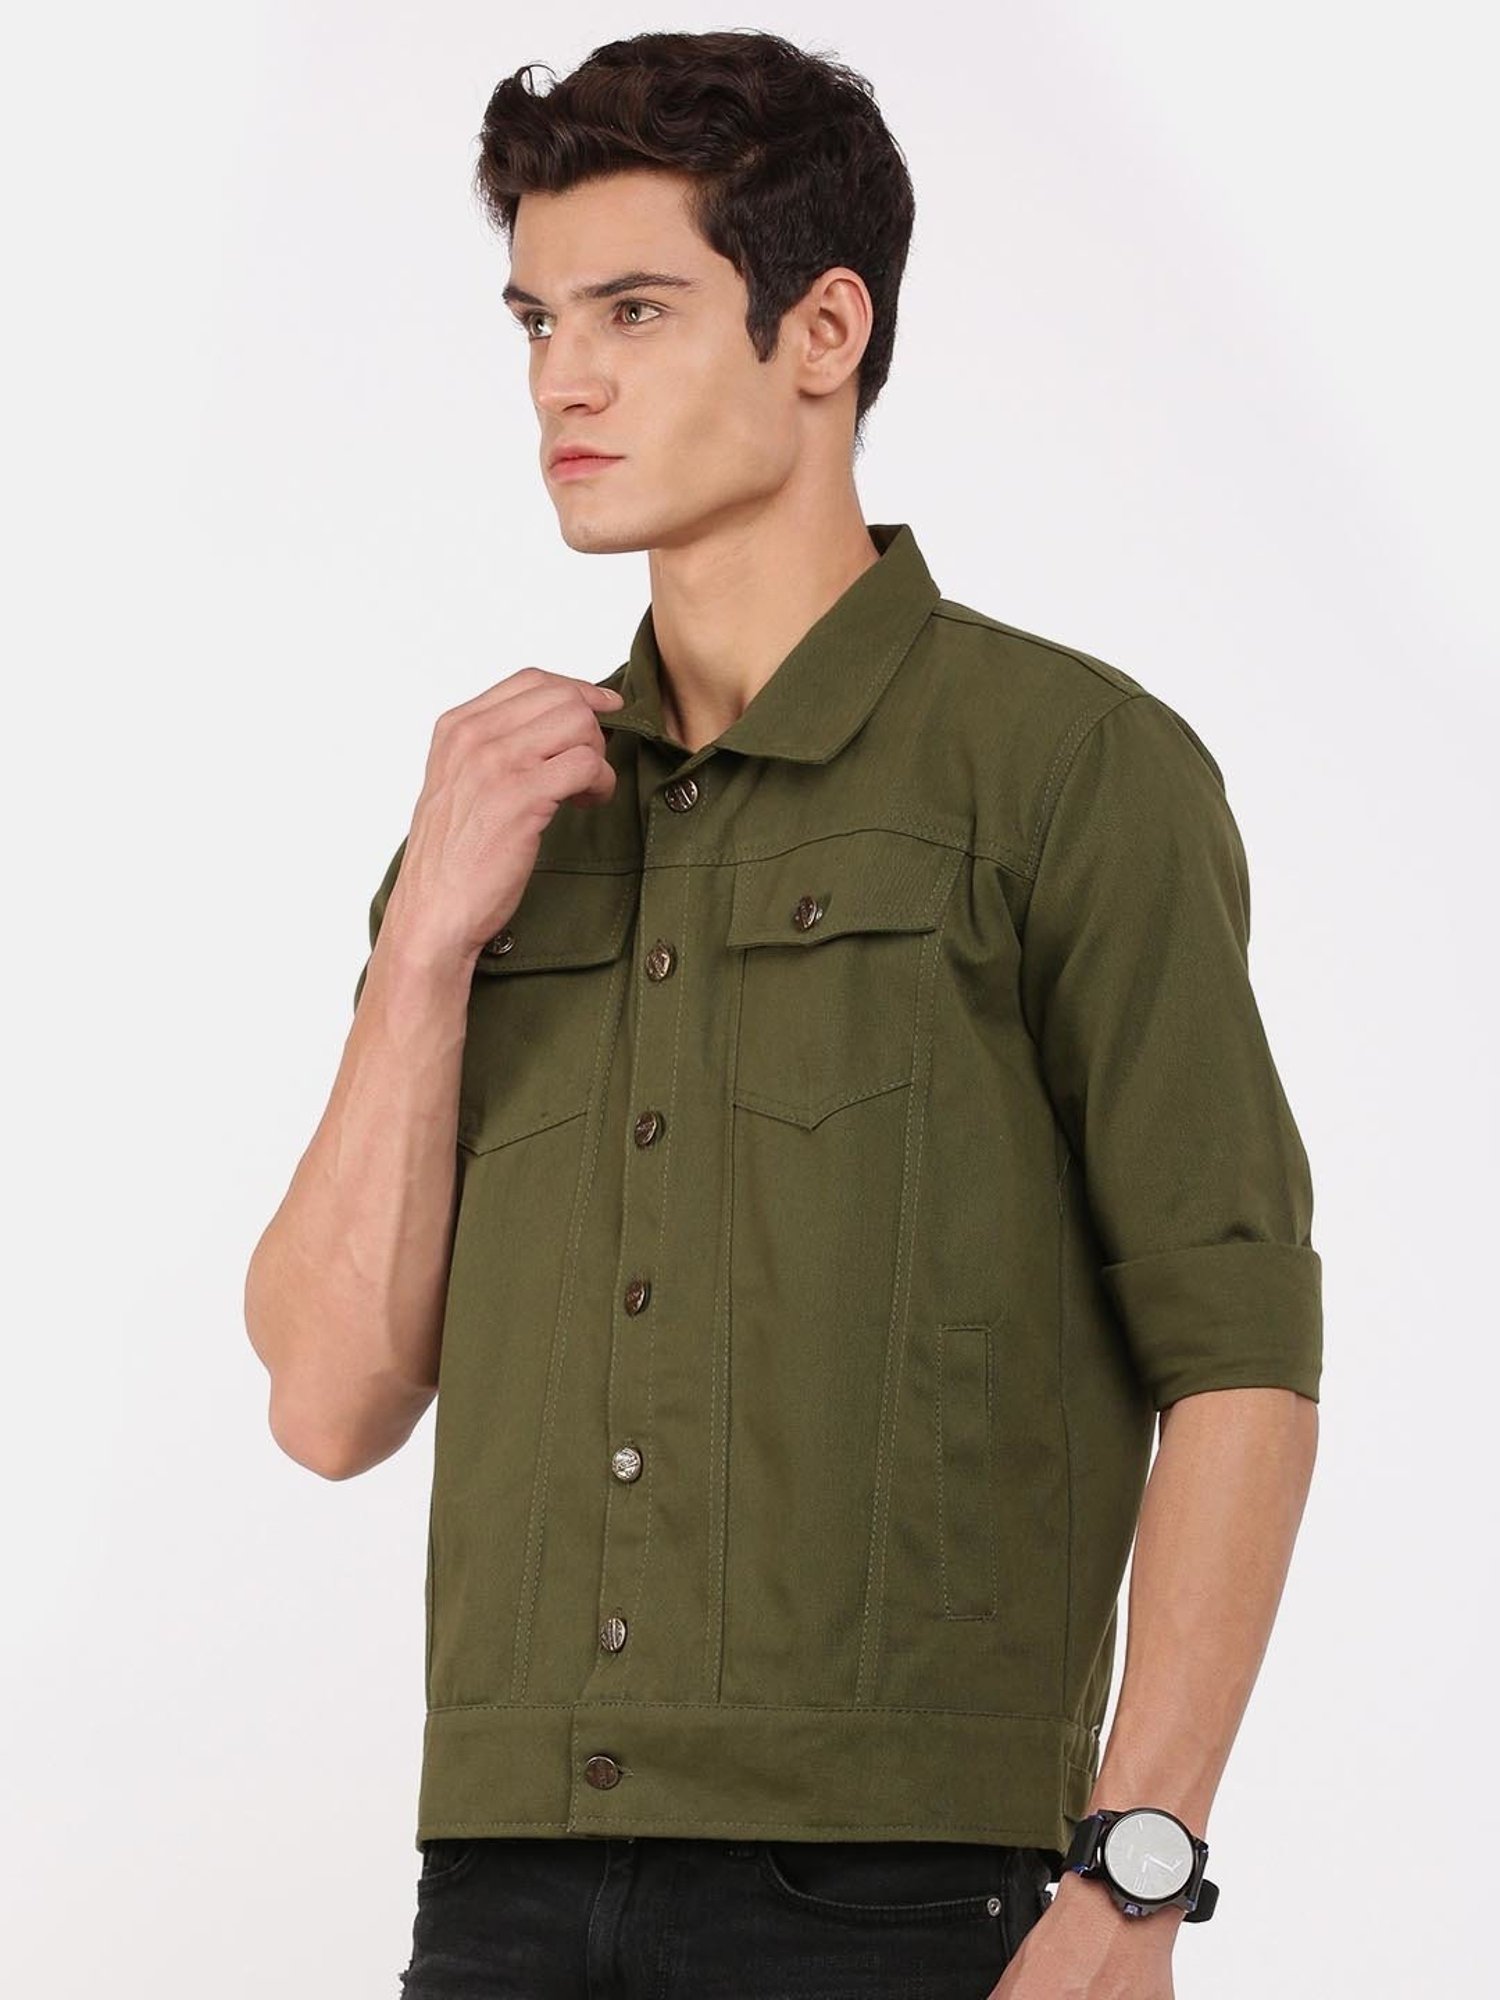 Buy Olive Green Jackets & Coats for Men by ALLEN SOLLY Online | Ajio.com